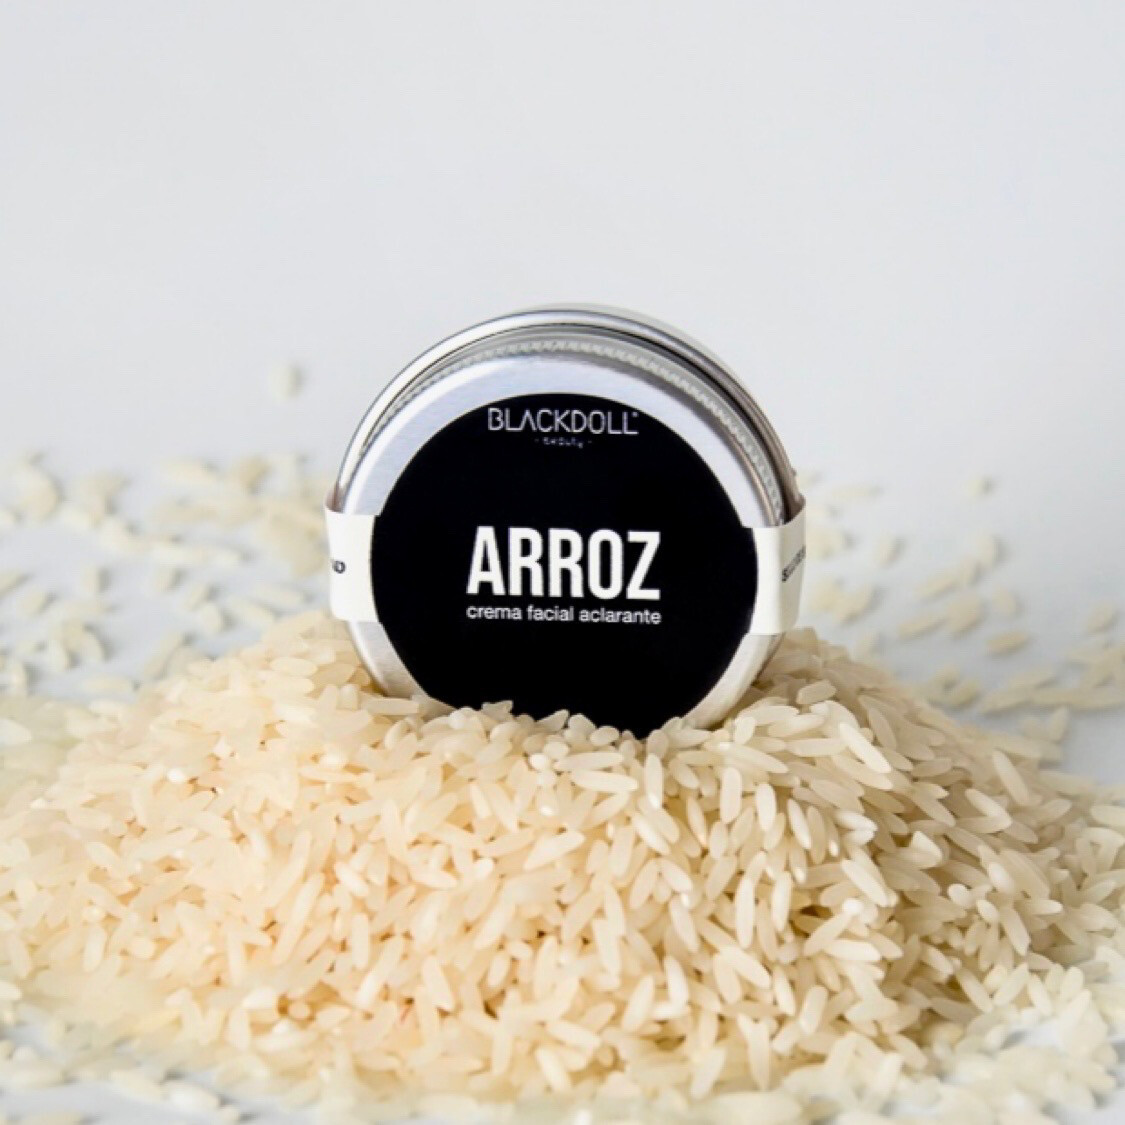 BLACKDOLL BEAUTY - Crema Facial Aclarante de Arroz 30grs | Lightening Face Cream